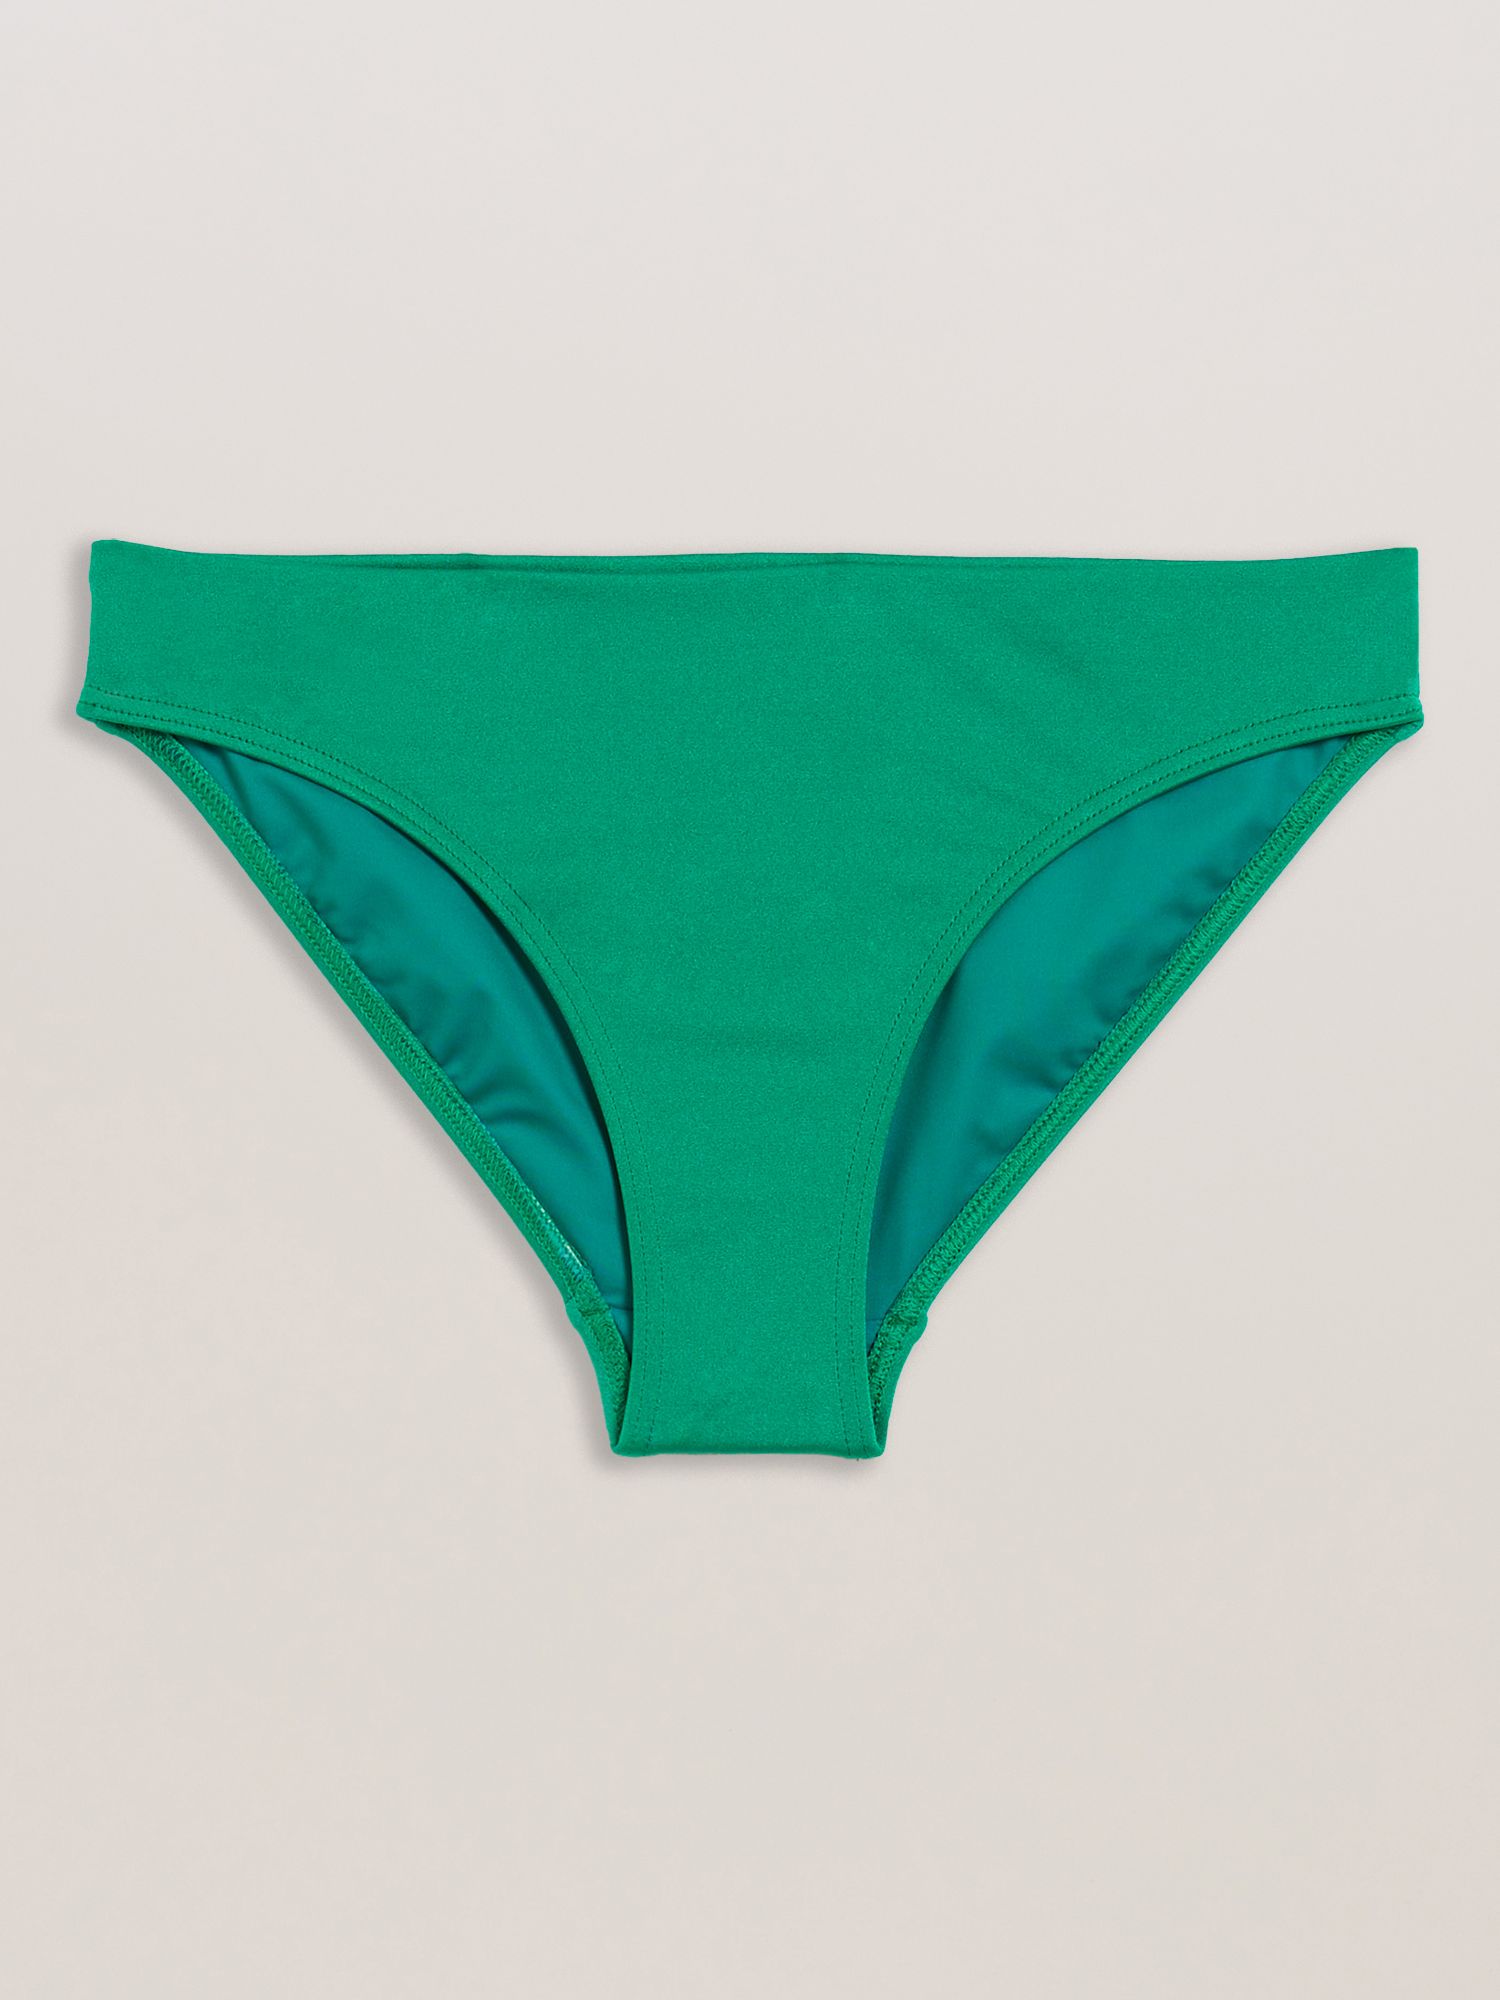 Ted Baker Lilynnn Bikini Bottoms, Green, 10